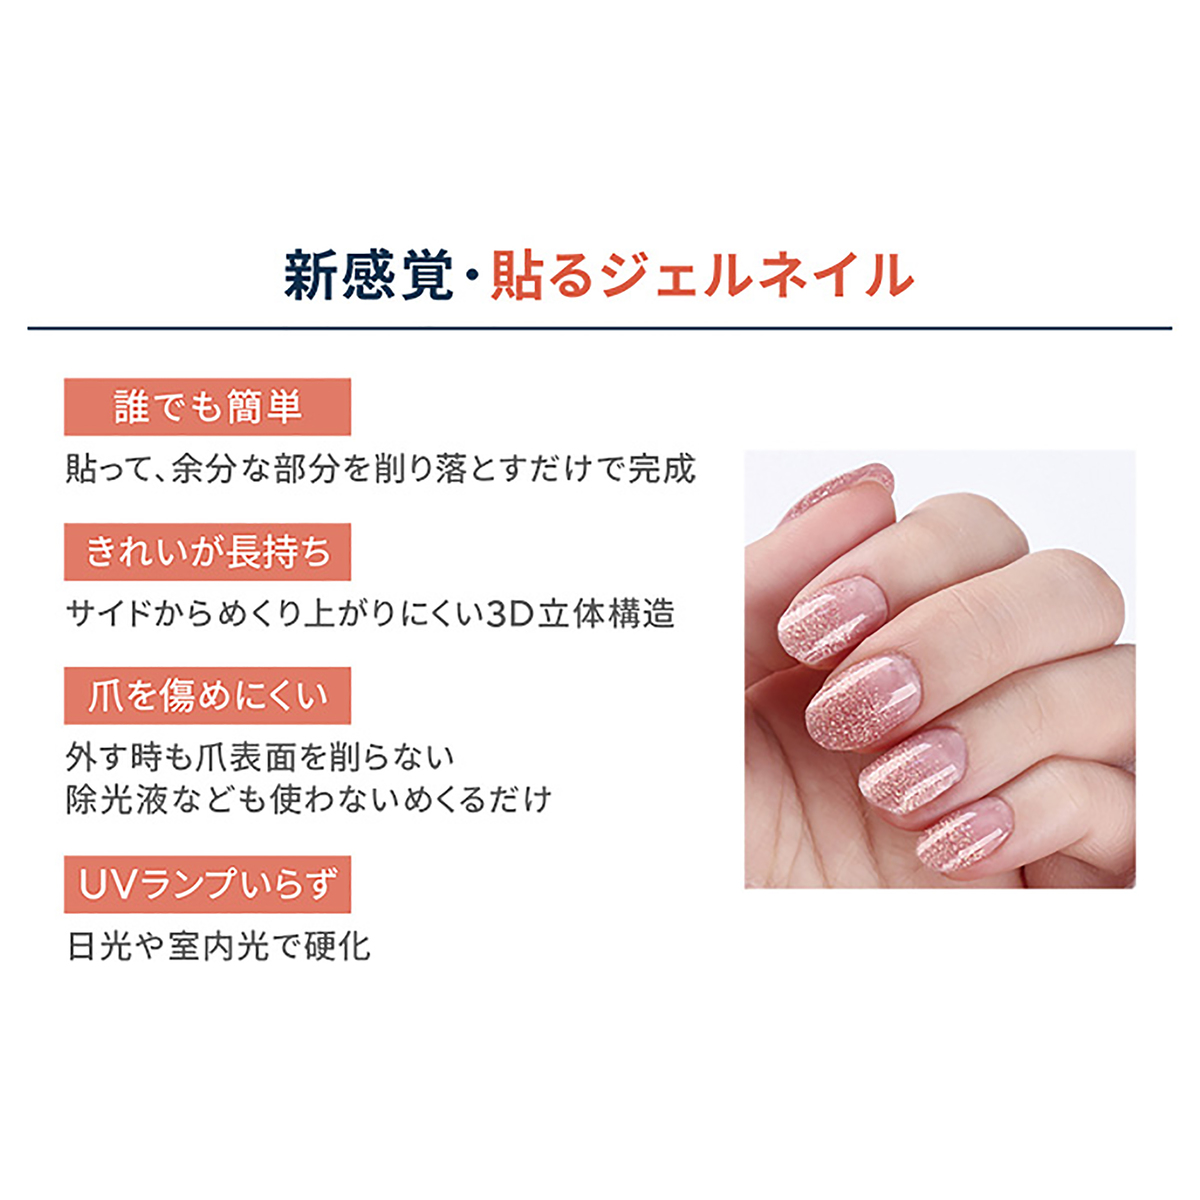 Hands Nailsbeauty ワンタッチ3dジェルネイル 3箱セット ハンドアンドネイルビューティ Hands And Nails Beauty Qvc Jp